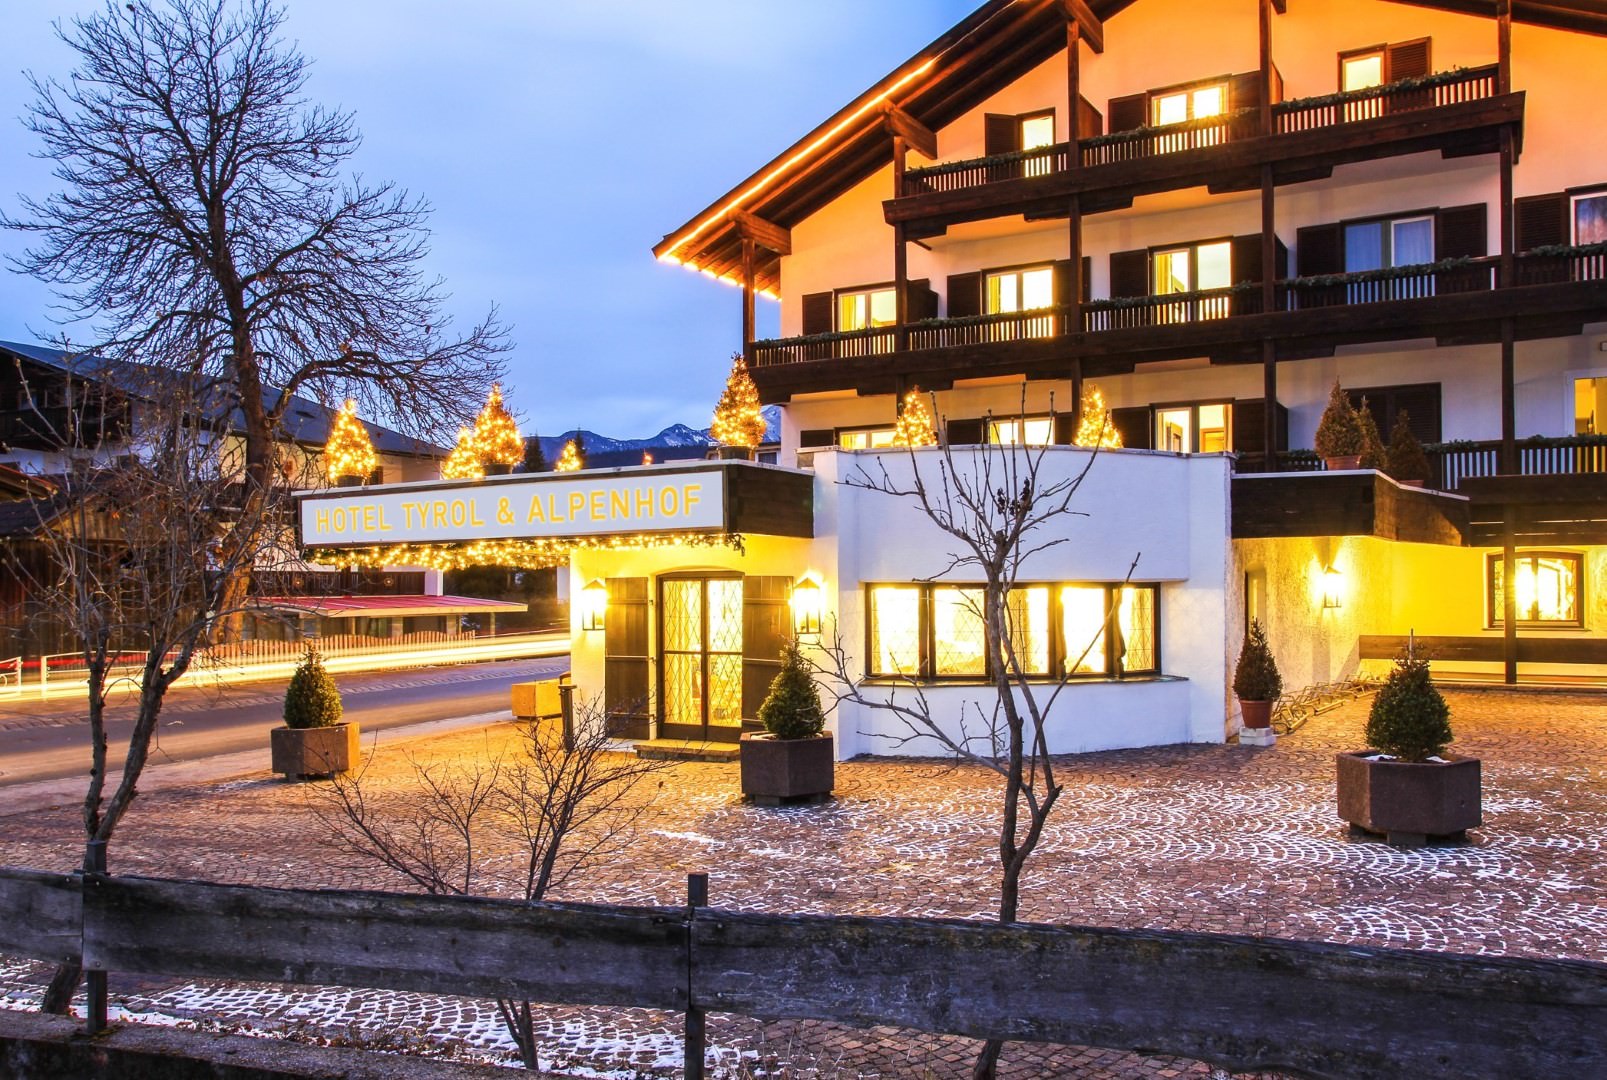 Hotel Tyrol & Alpenhof in Seefeld in Tirol, Hotel Tyrol & Alpenhof / Österreich